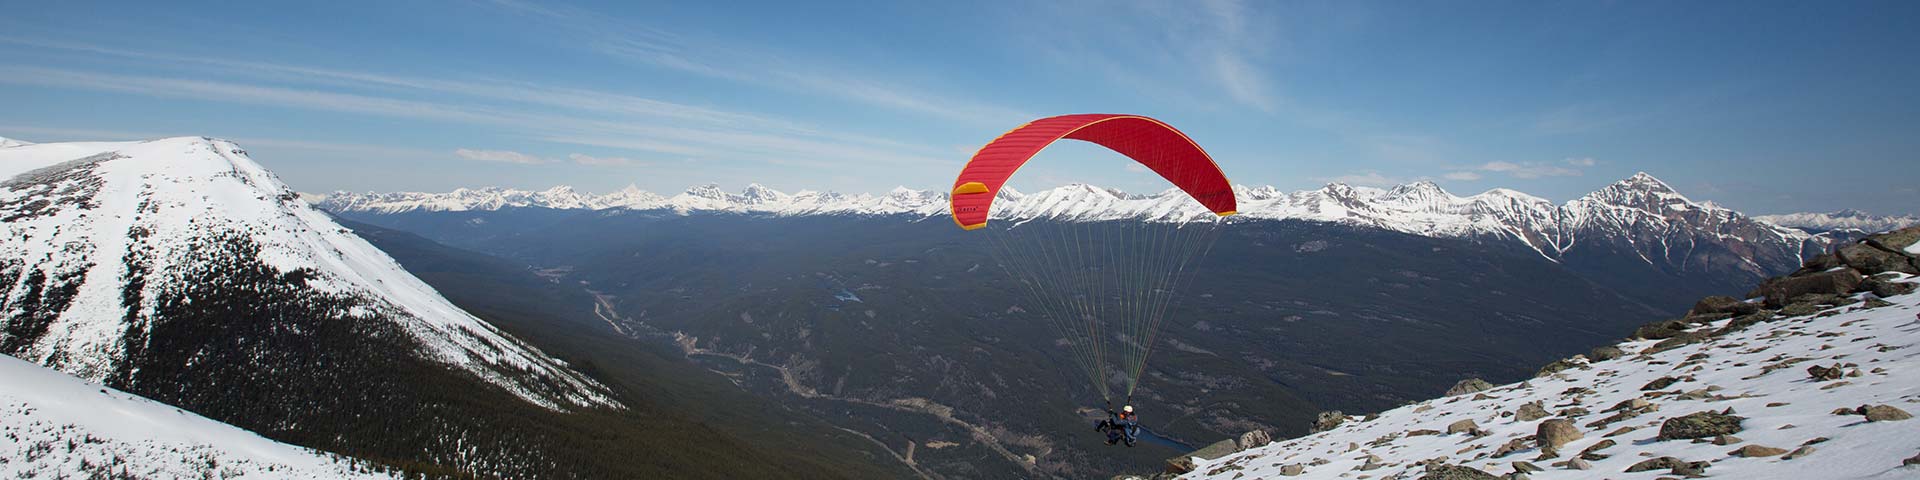 Paragliding and hang gliding